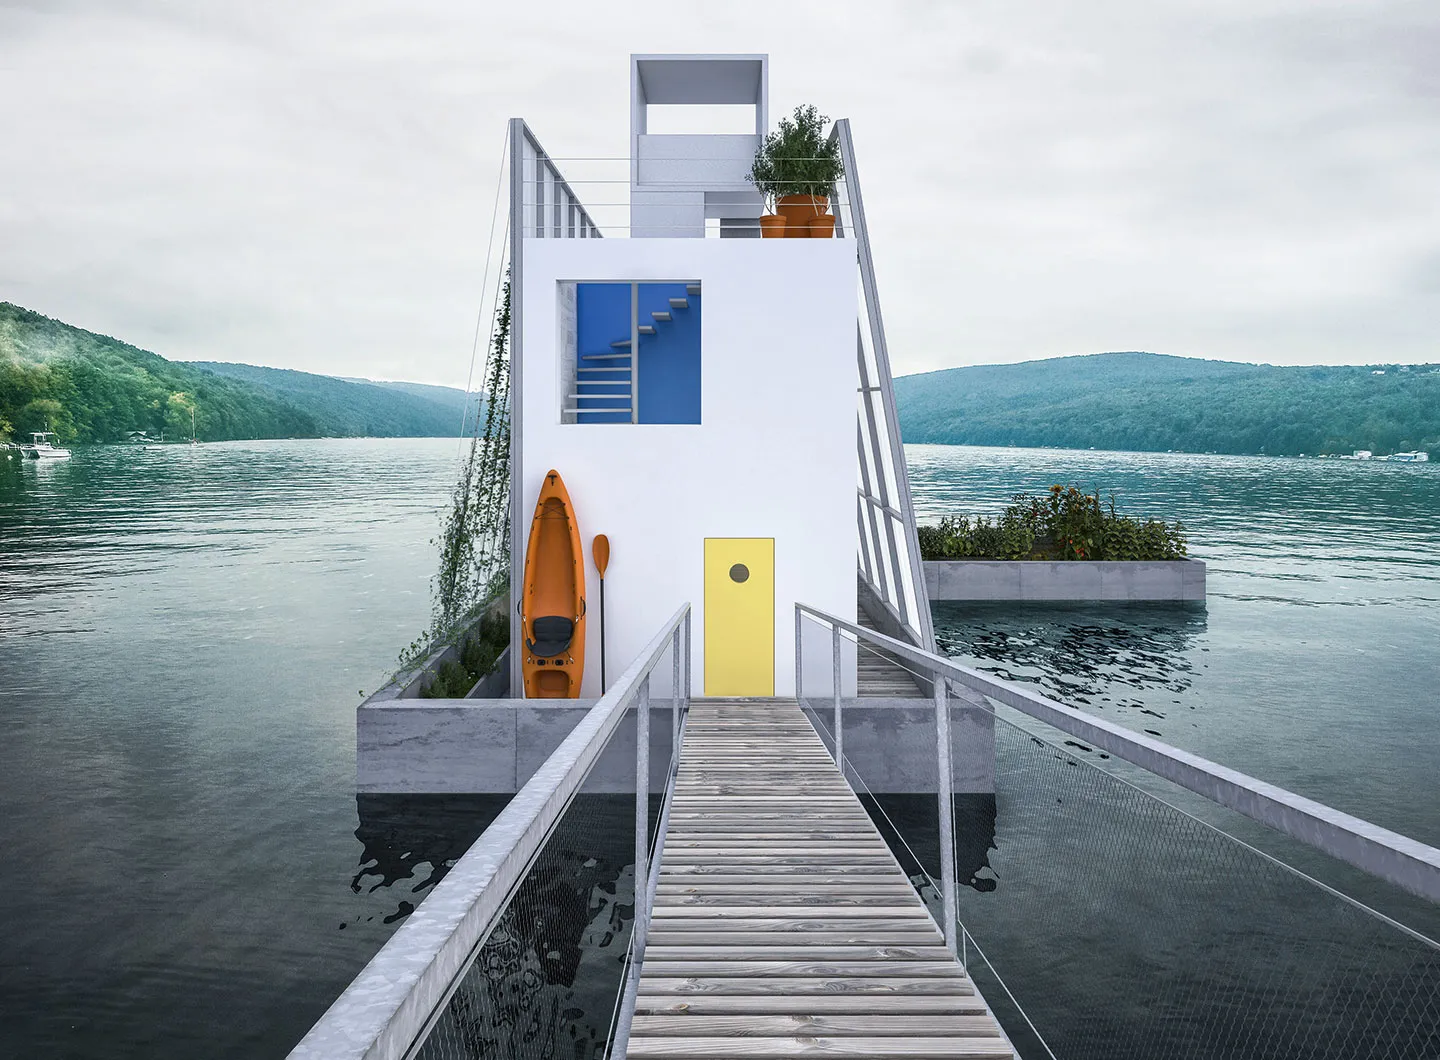 Carl Turner – Floating House